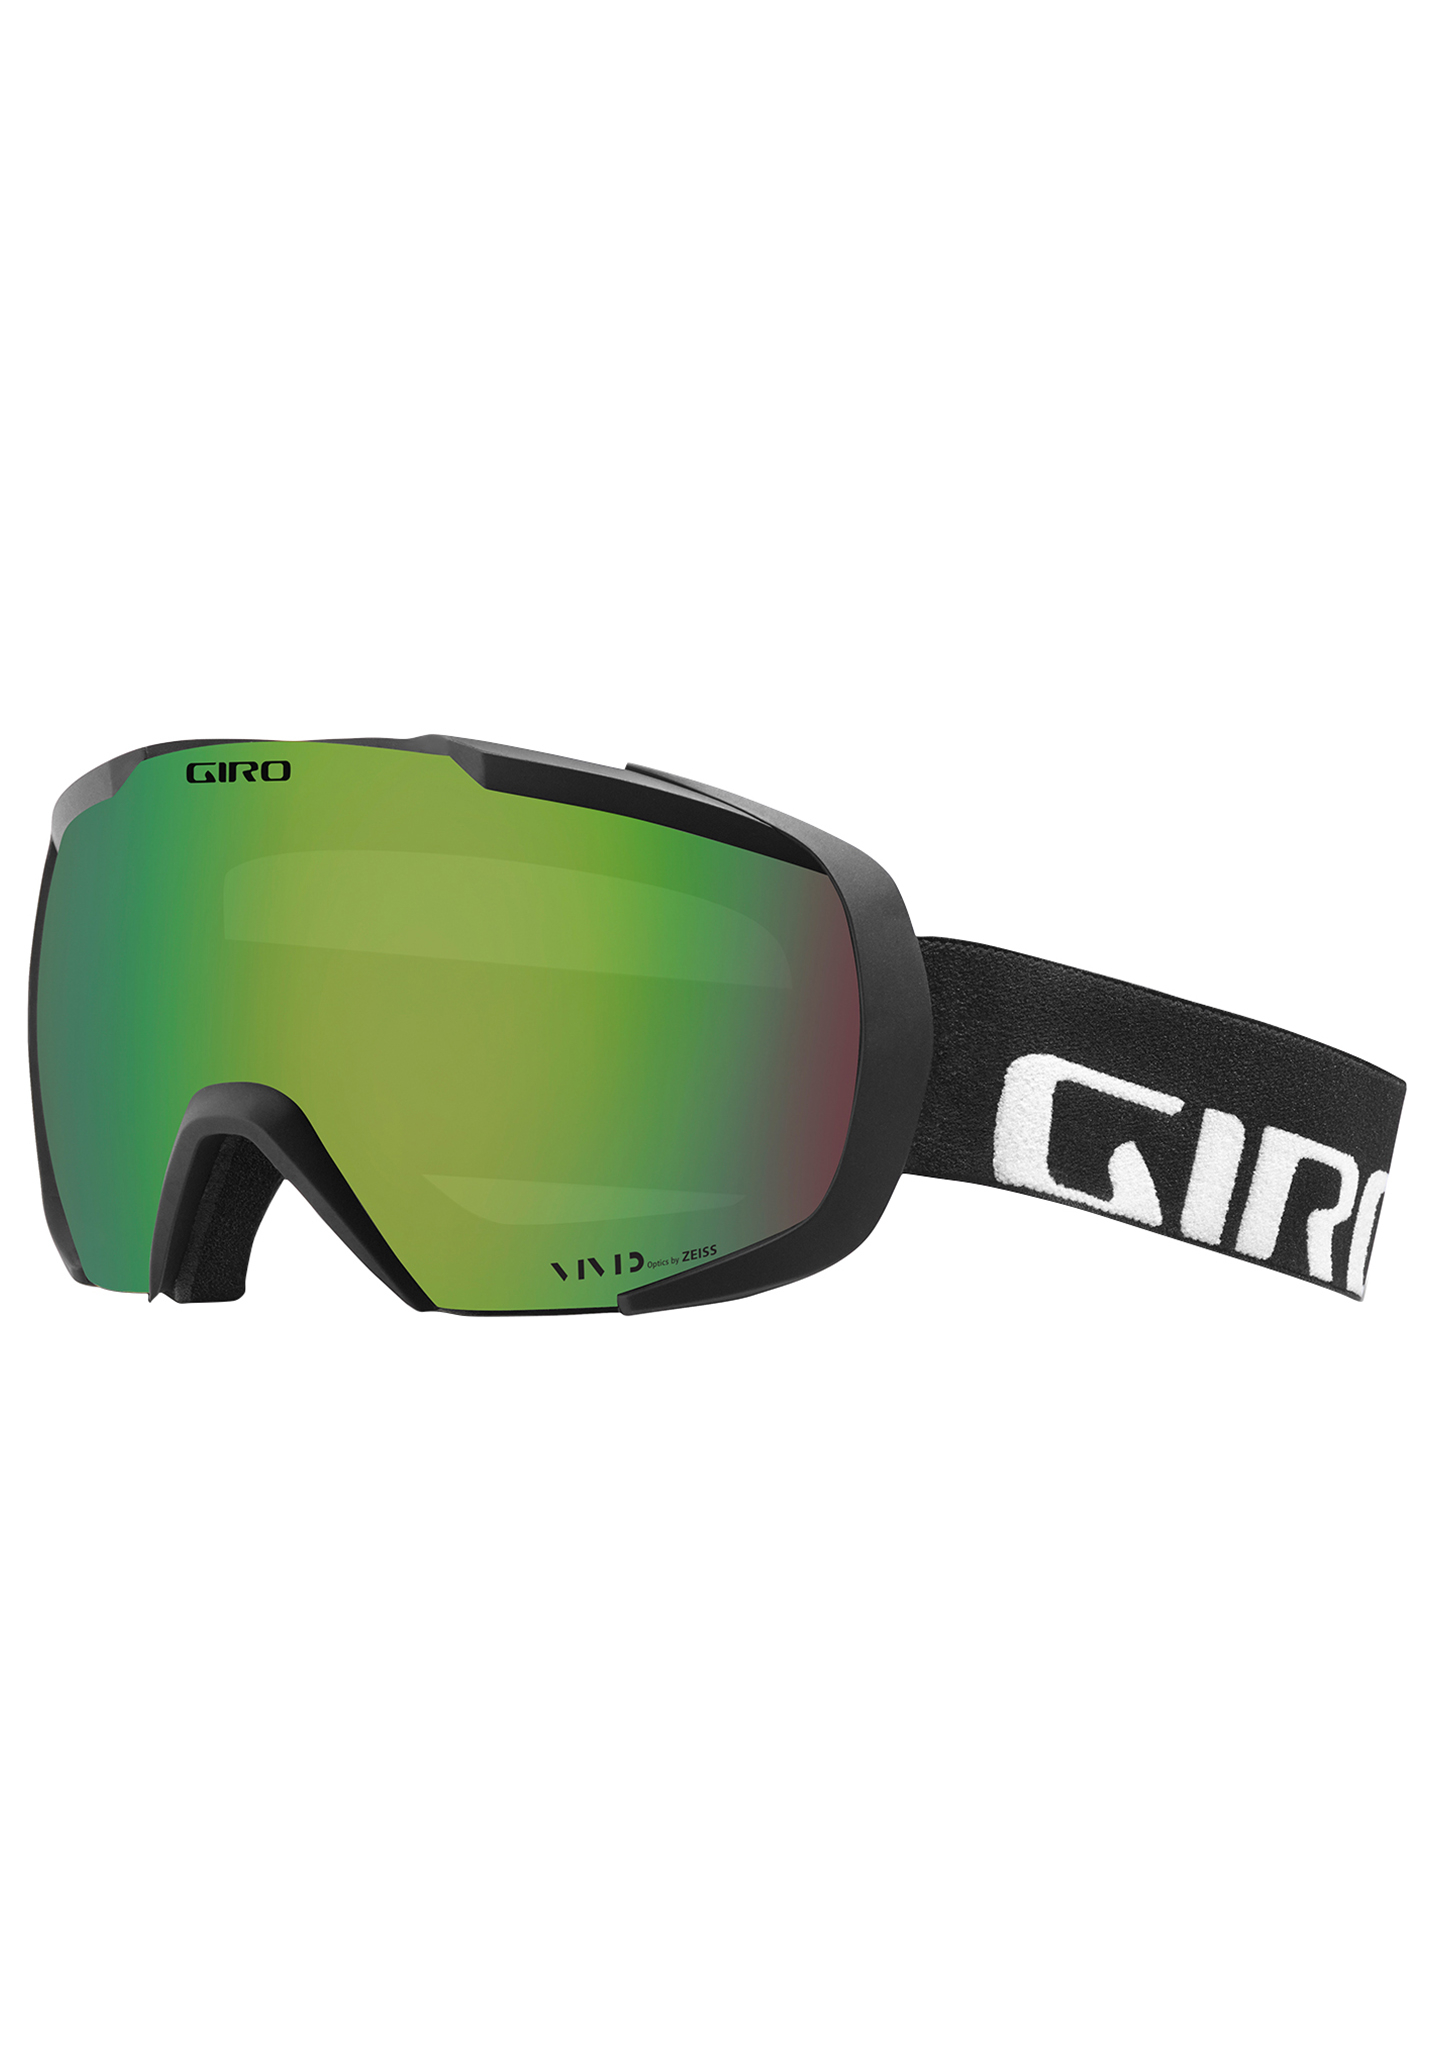 Giro Onset Snowboardbrillen schwarze wortmarke One Size